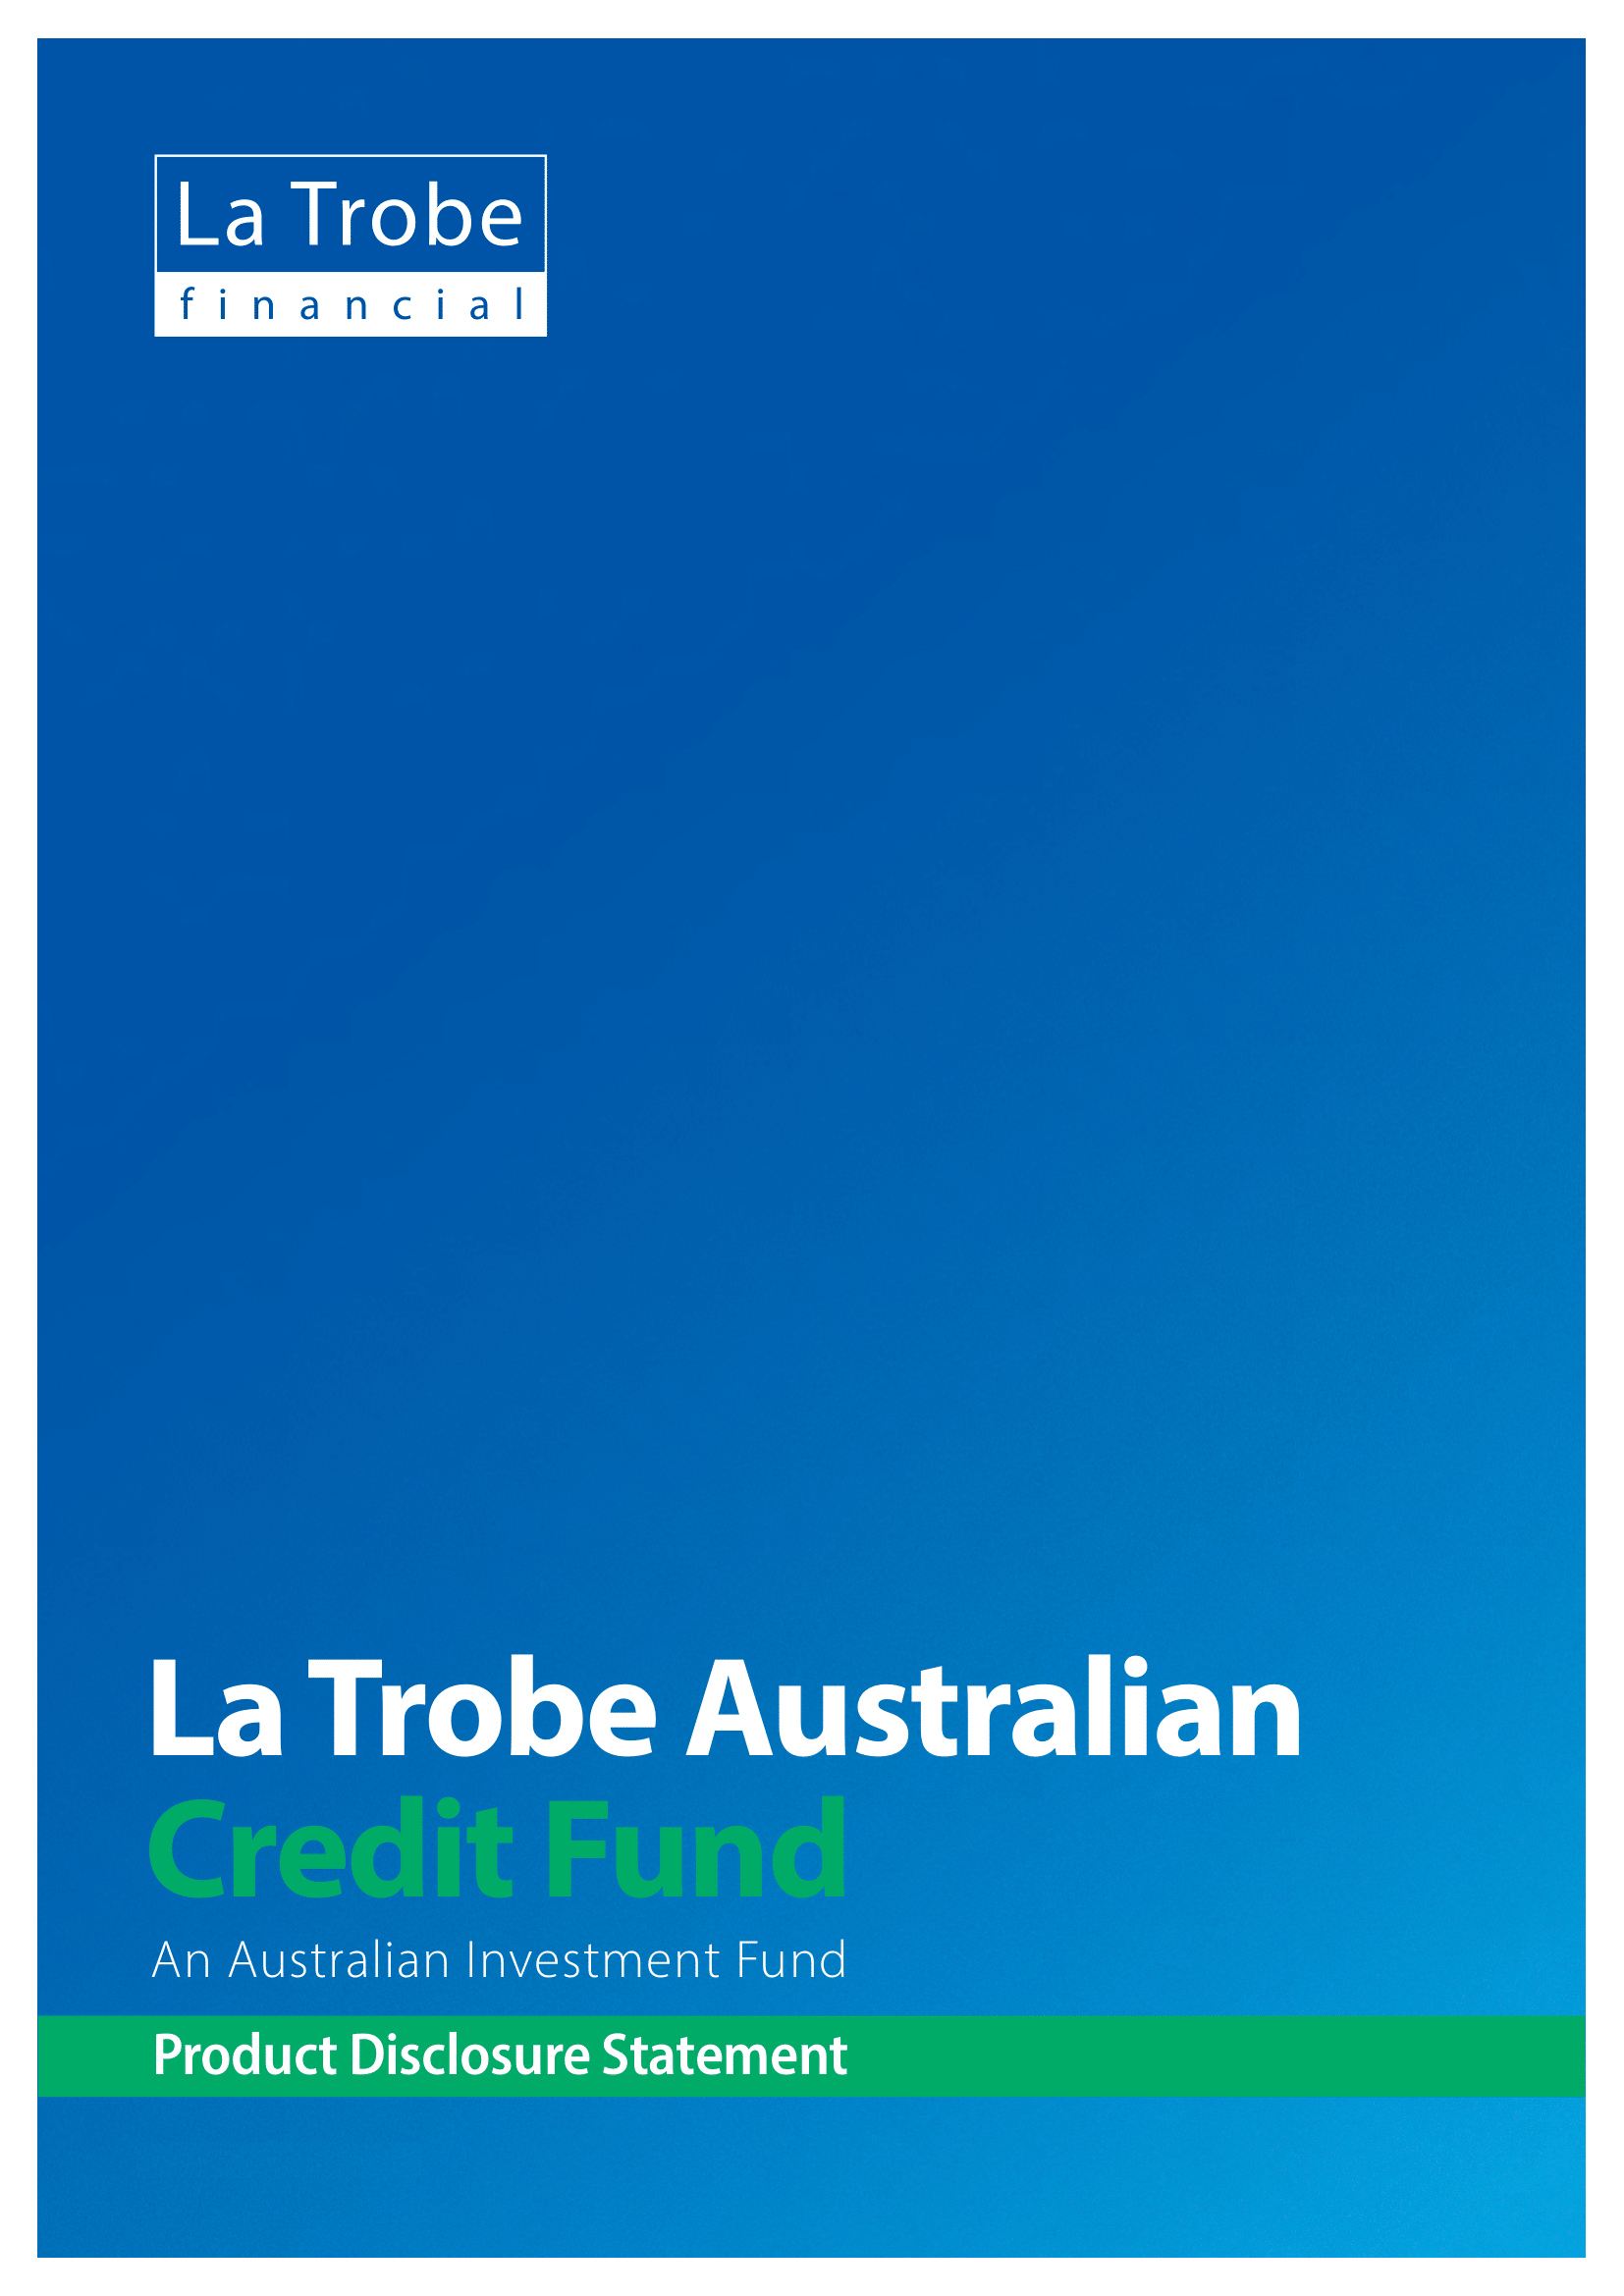 La Trobe Australian Credit Fund